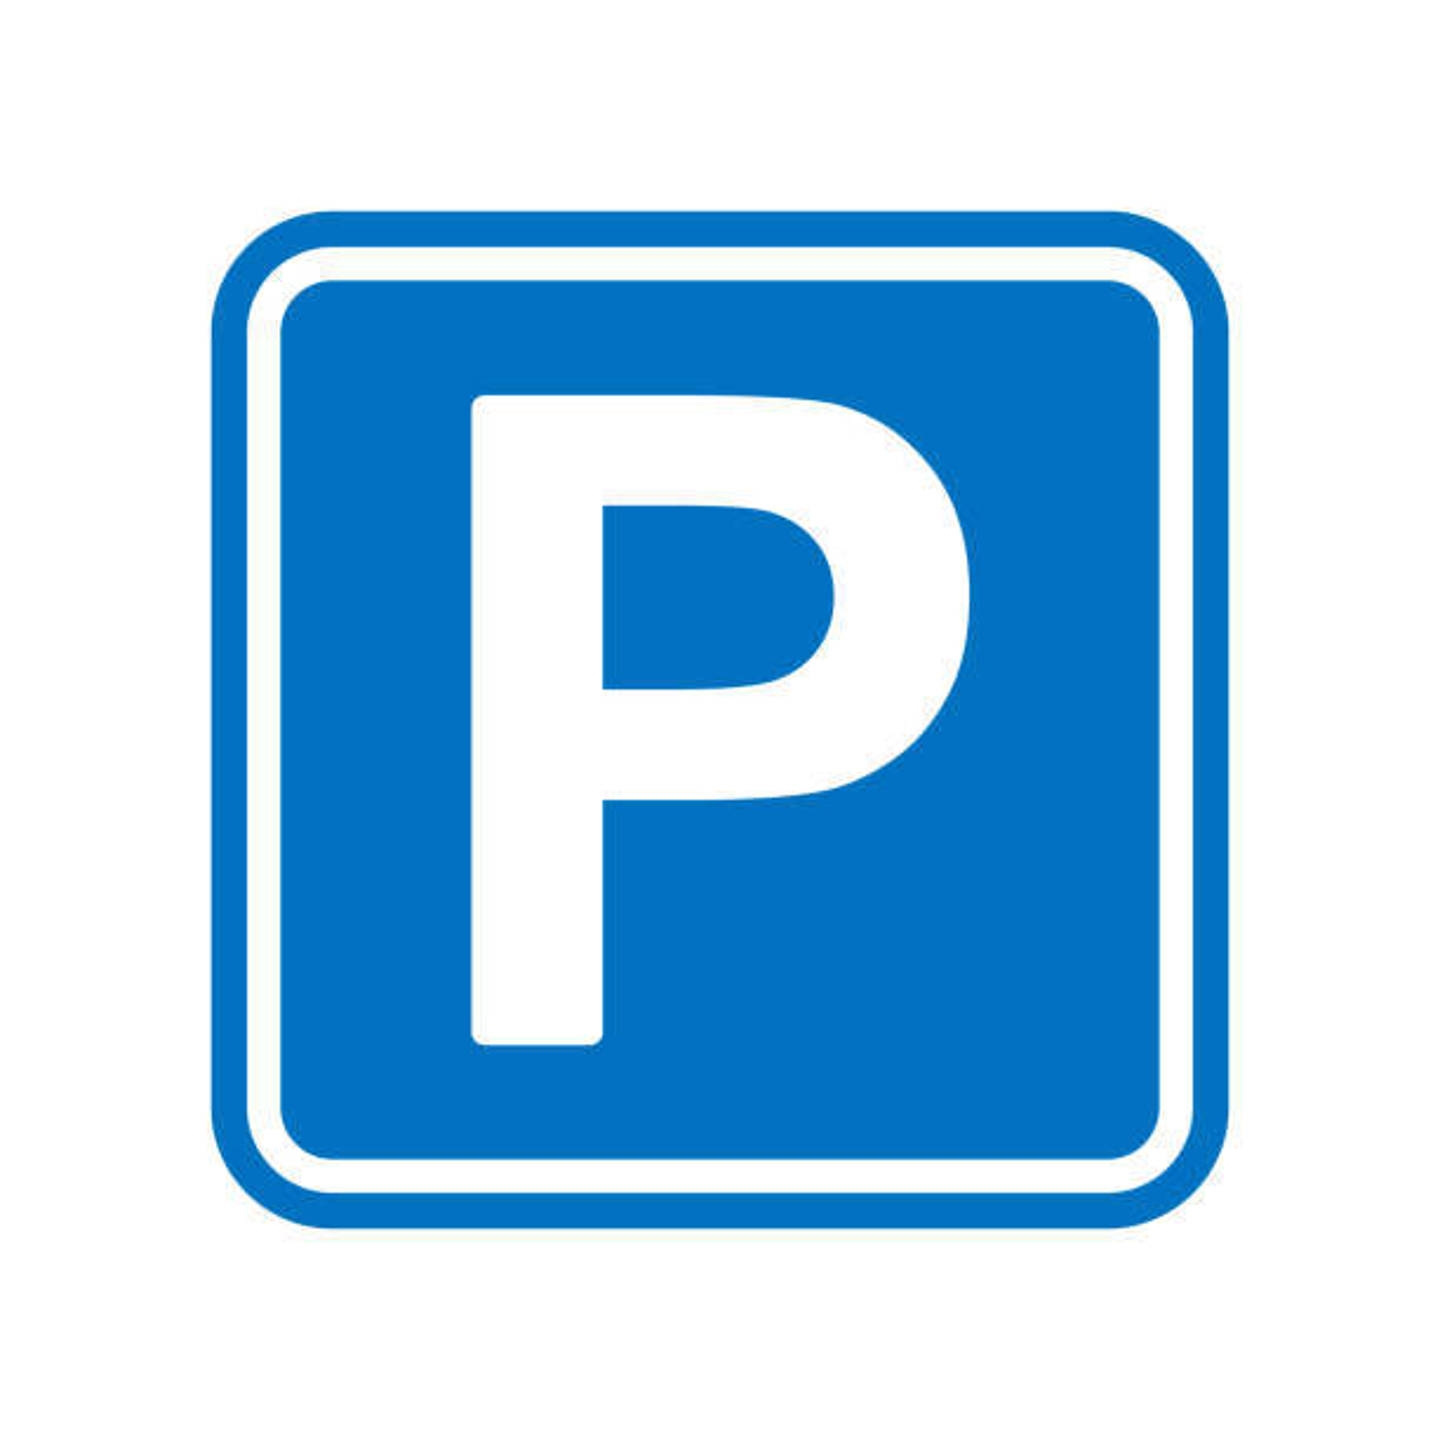 Parking / garage à vendre à Neder-Over-Heembeek 1120 82400.00€  chambres 12.50m² - annonce 1324759